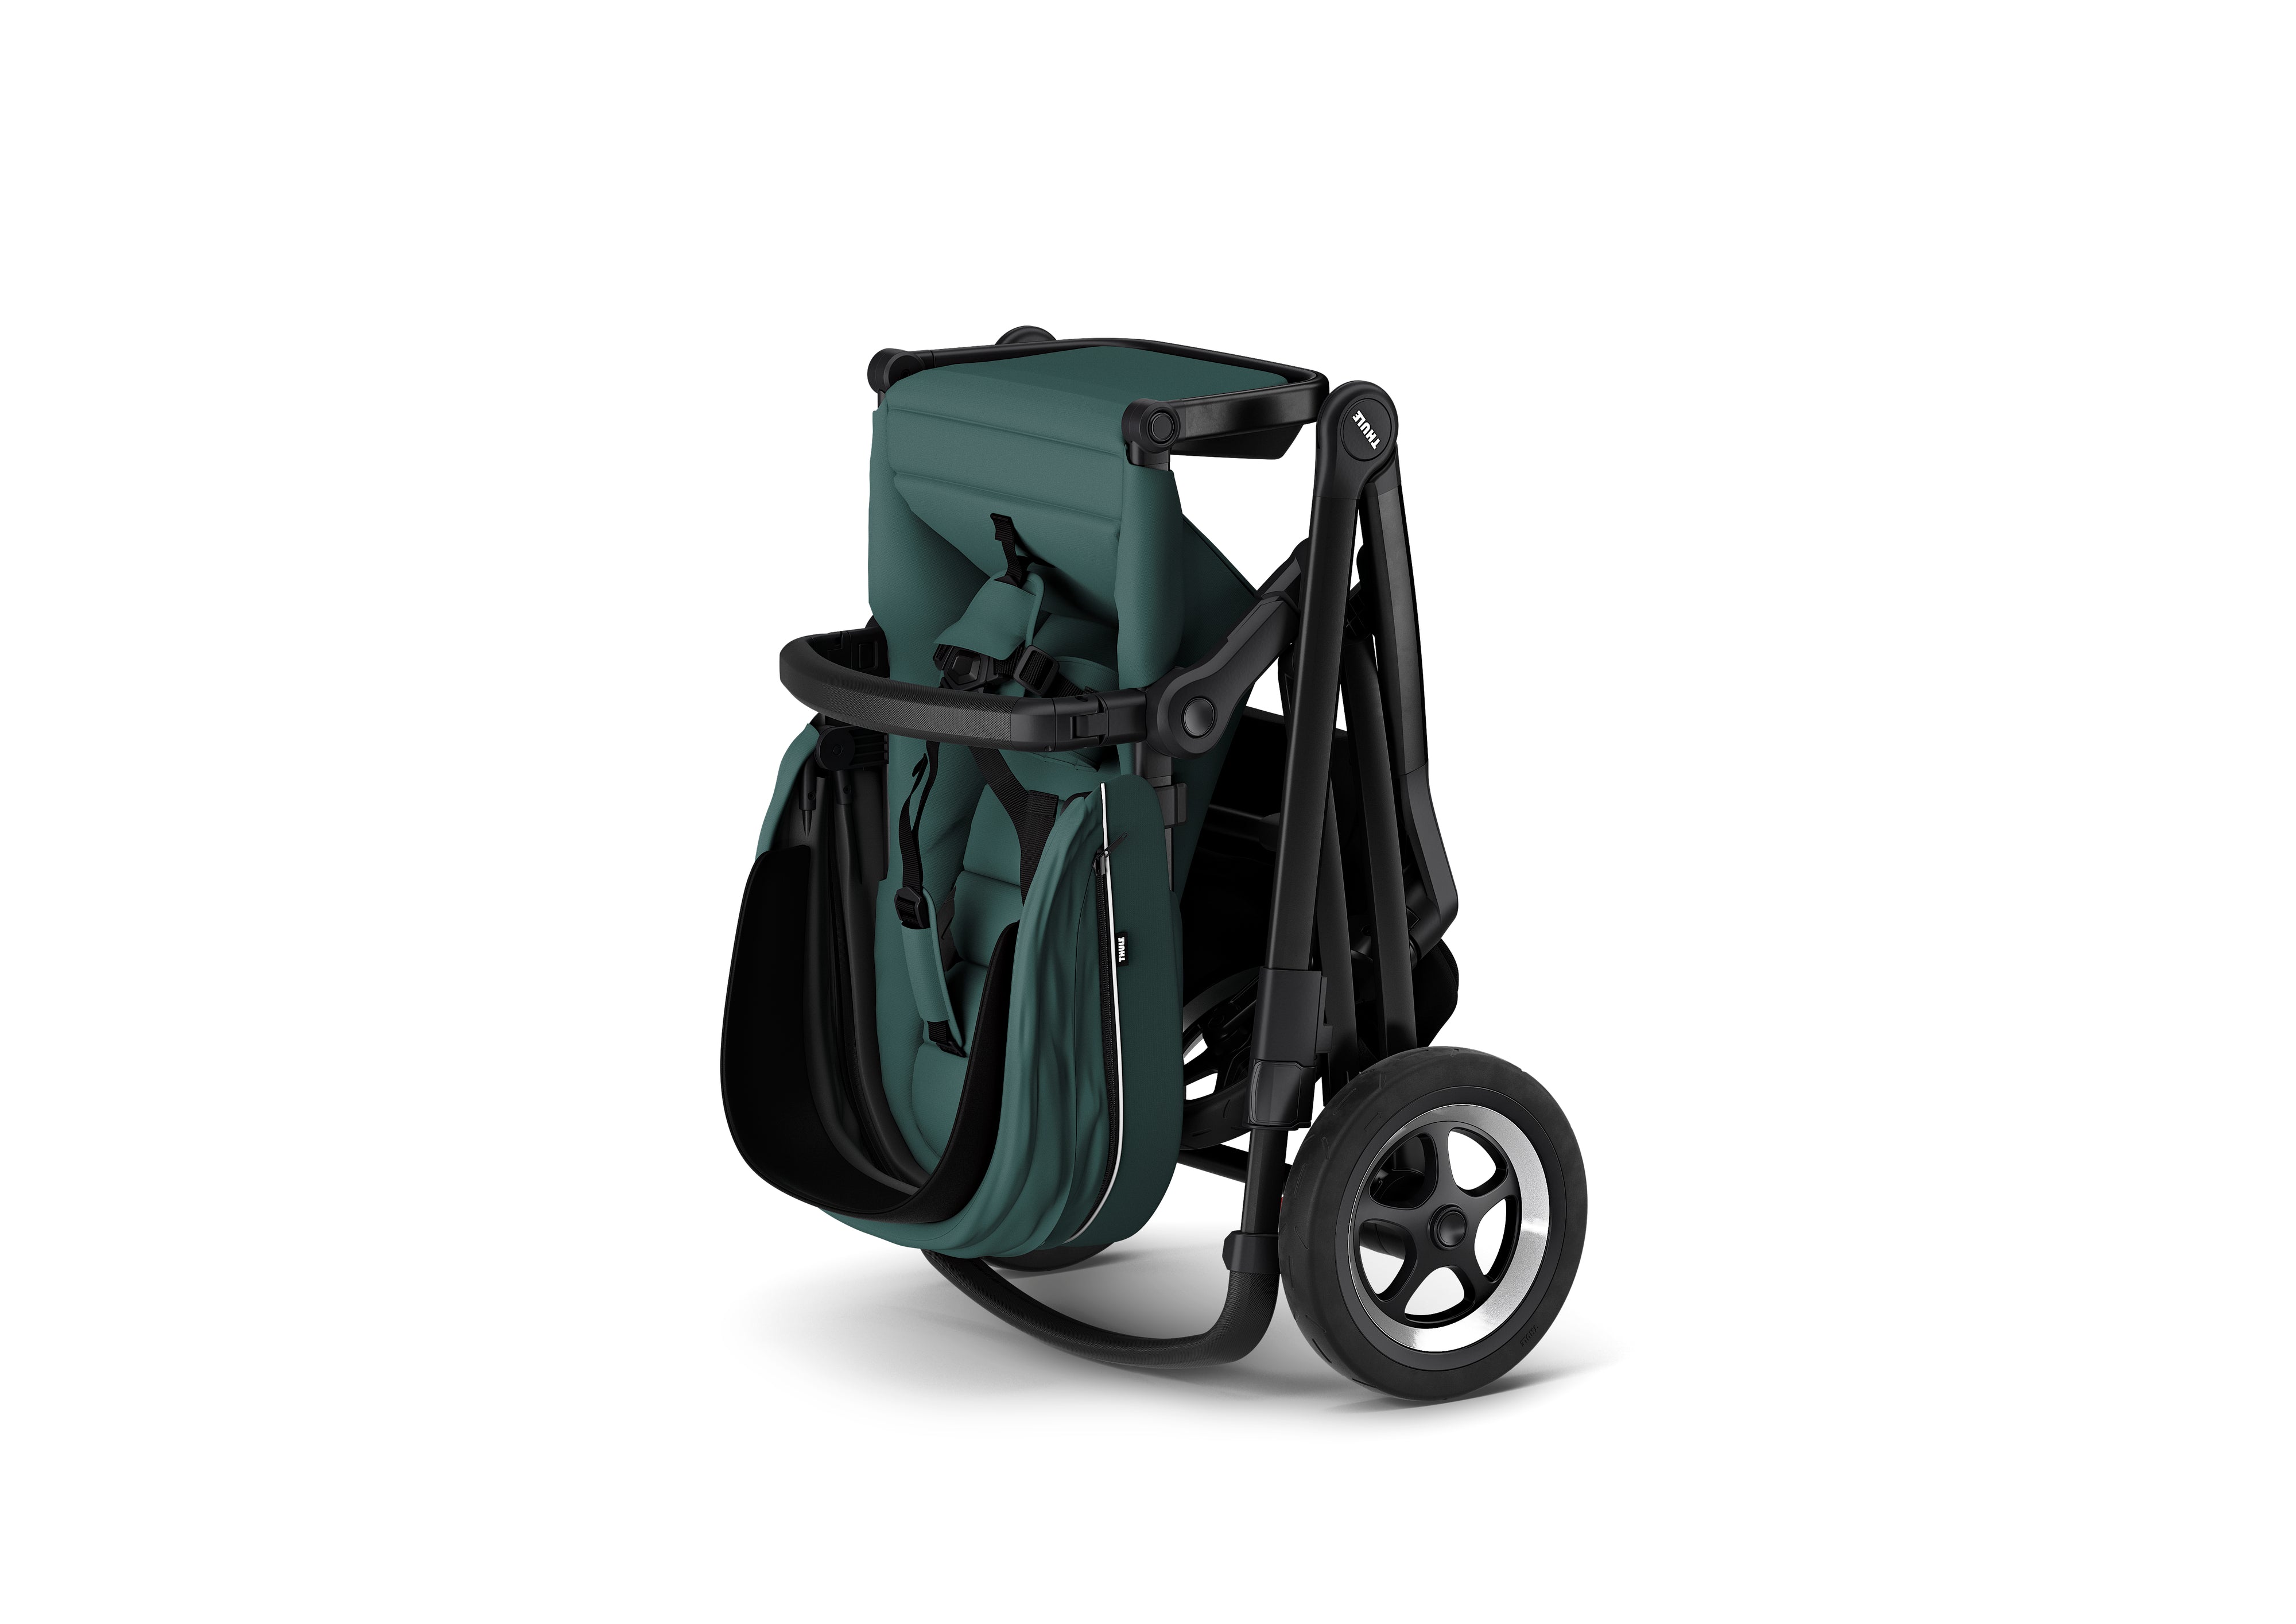 Thule Sleek Double Stroller Deluxe: Stroller + Sibling Seat